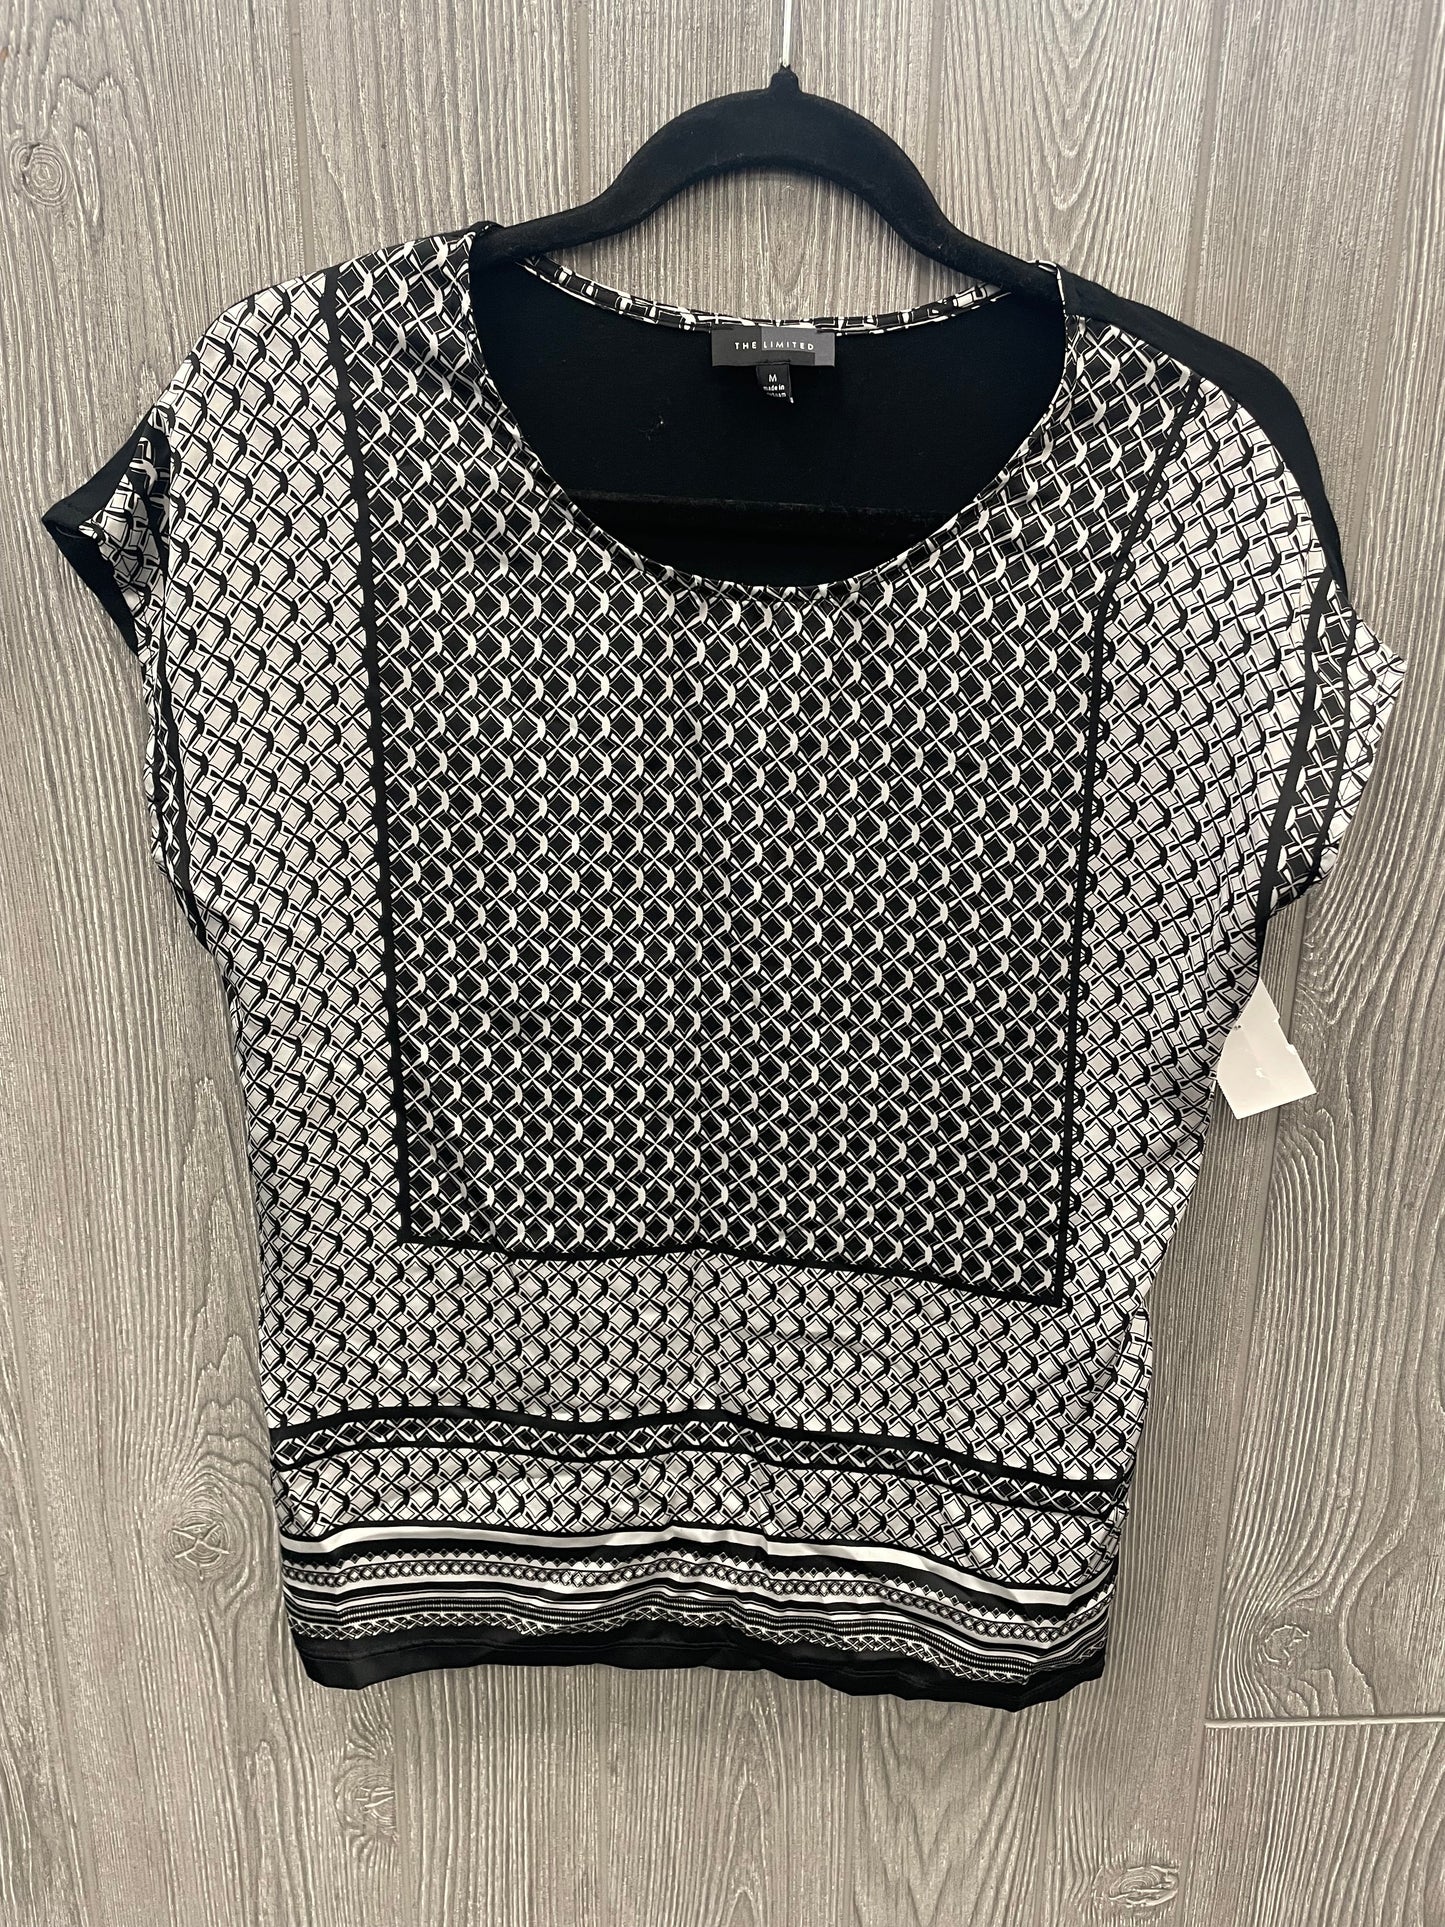 Black & White Blouse Short Sleeve Limited, Size M